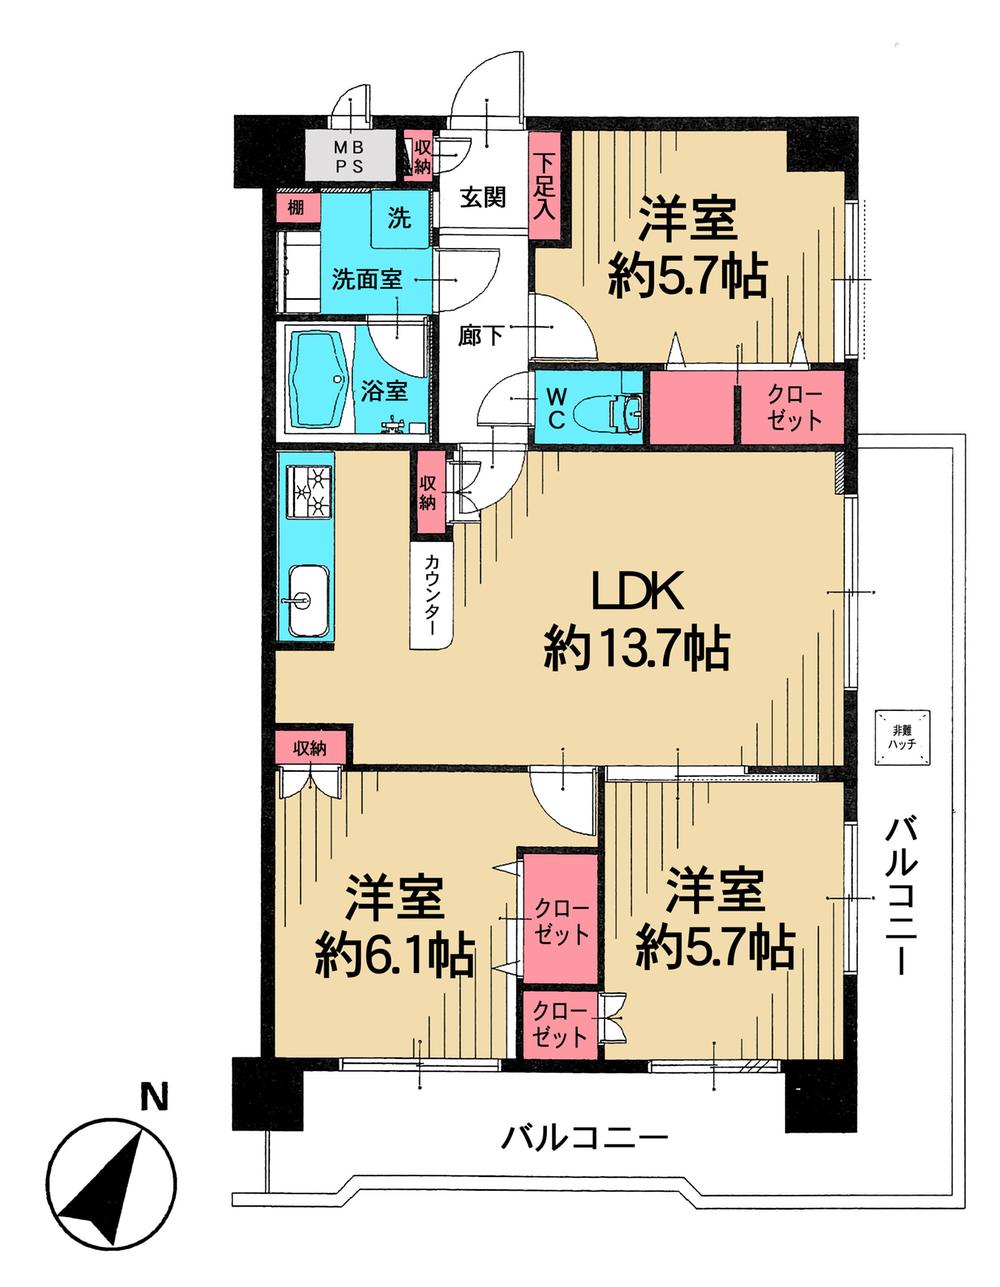 Floor plan. 3LDK, Price 19.9 million yen, Footprint 67.6 sq m , This room of the balcony area 19.29 sq m southeast corner room